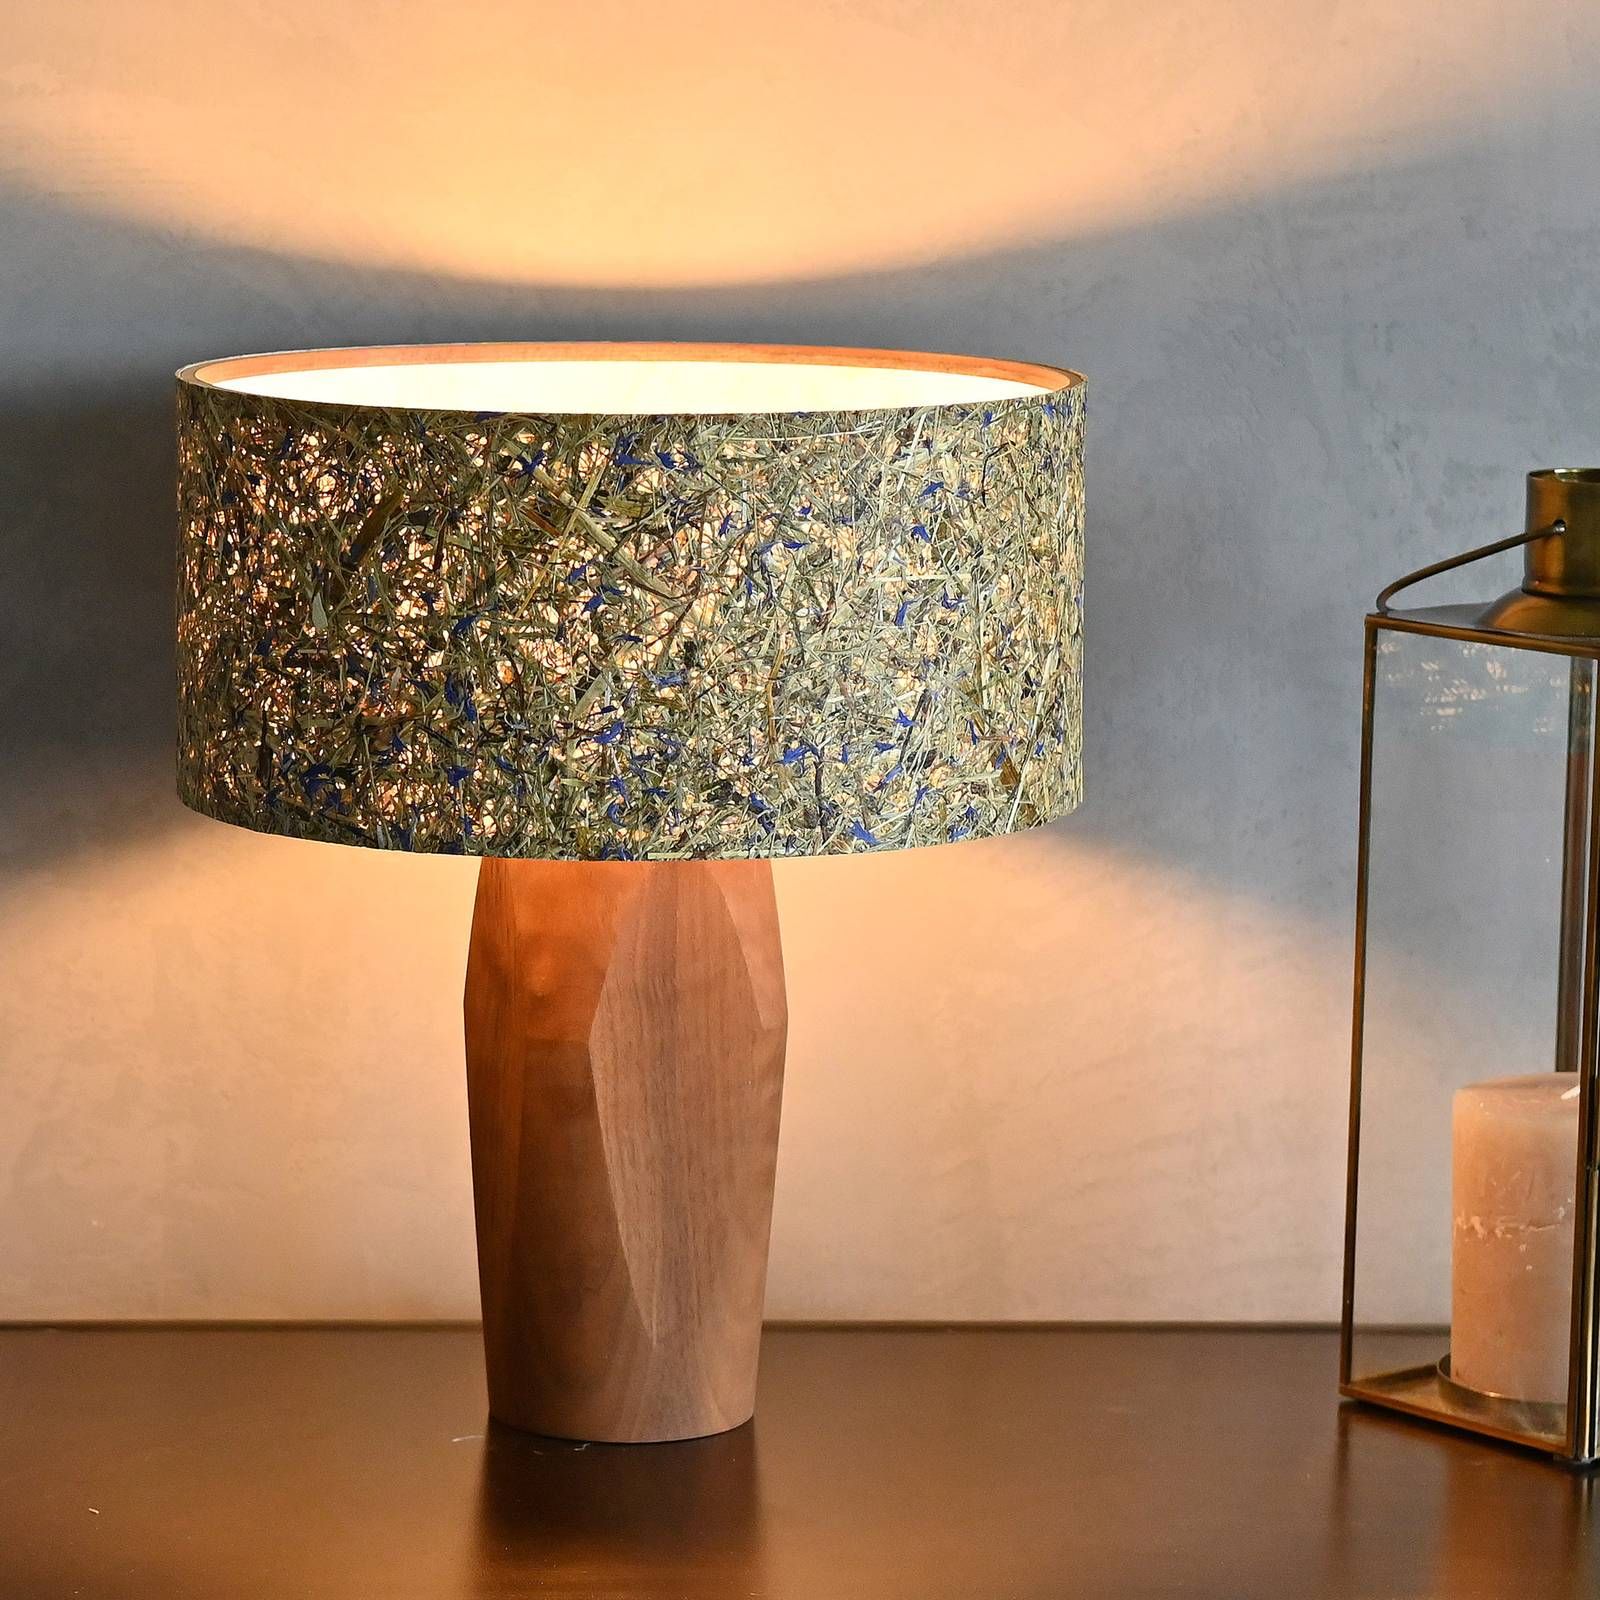 LeuchtNatur Pura stolová LED lampa orech/nevädza, Obývacia izba / jedáleň, drevo, alpské seno, E27, 7W, K: 33cm